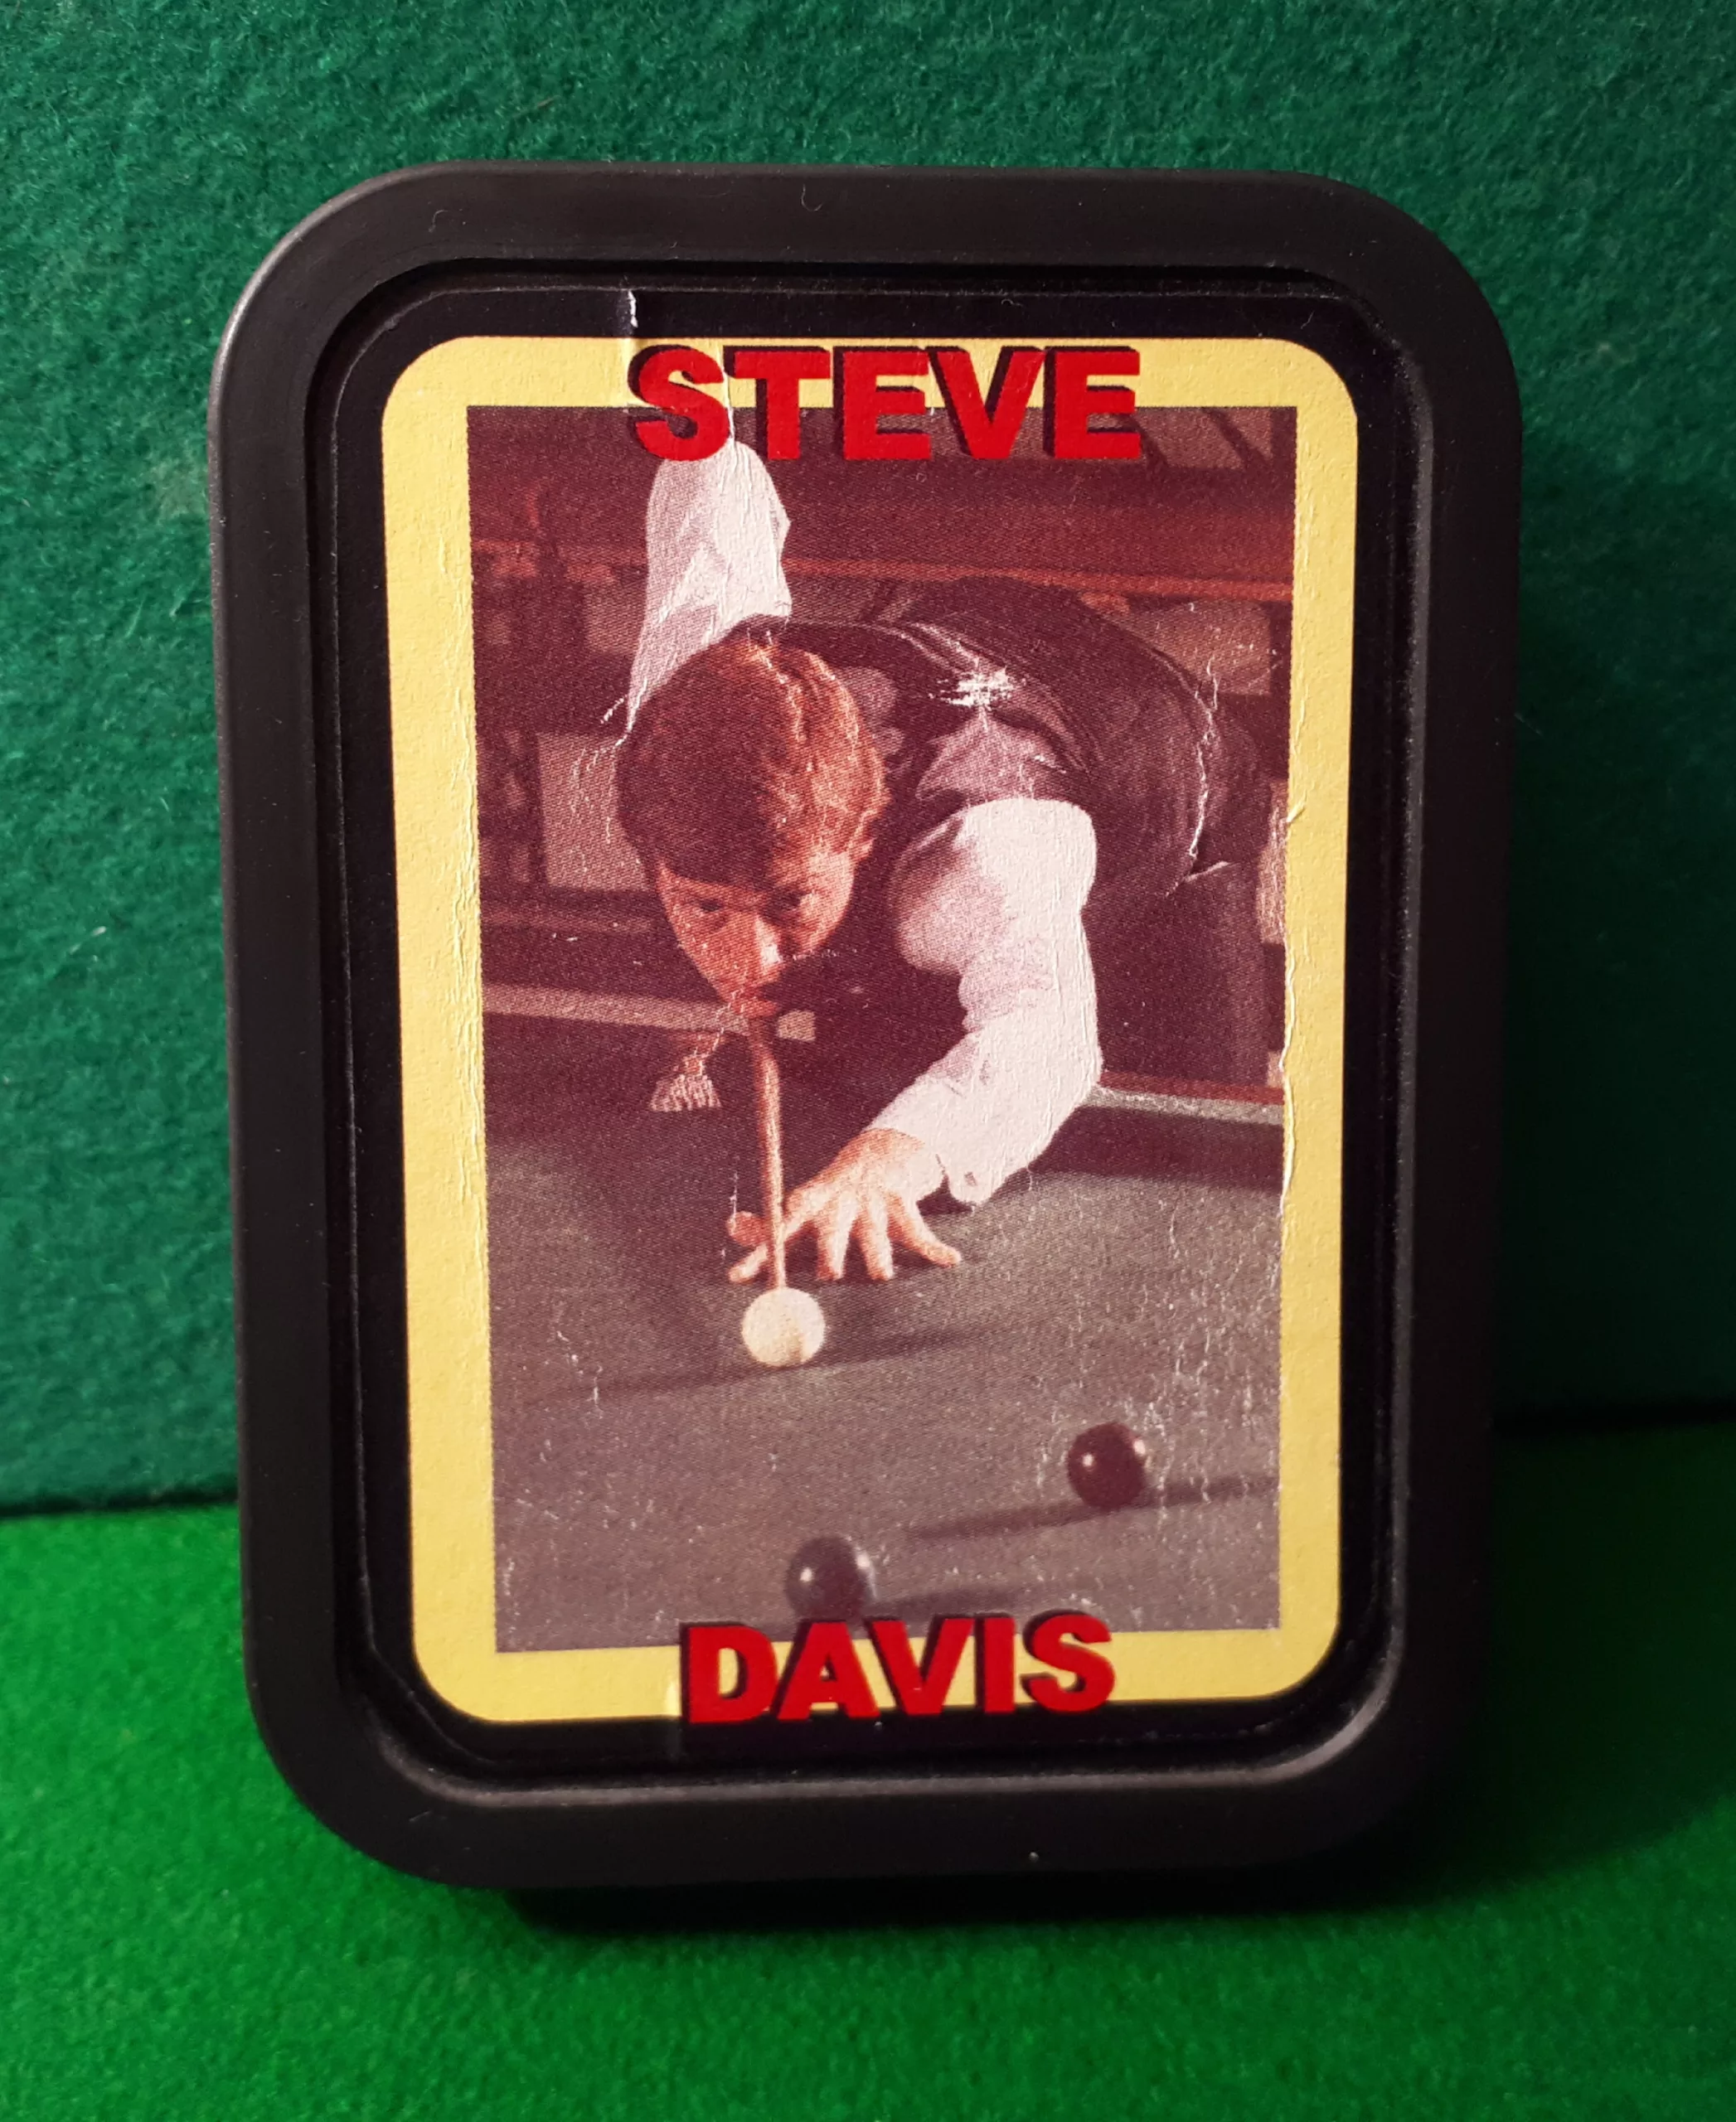 Steve Davis box